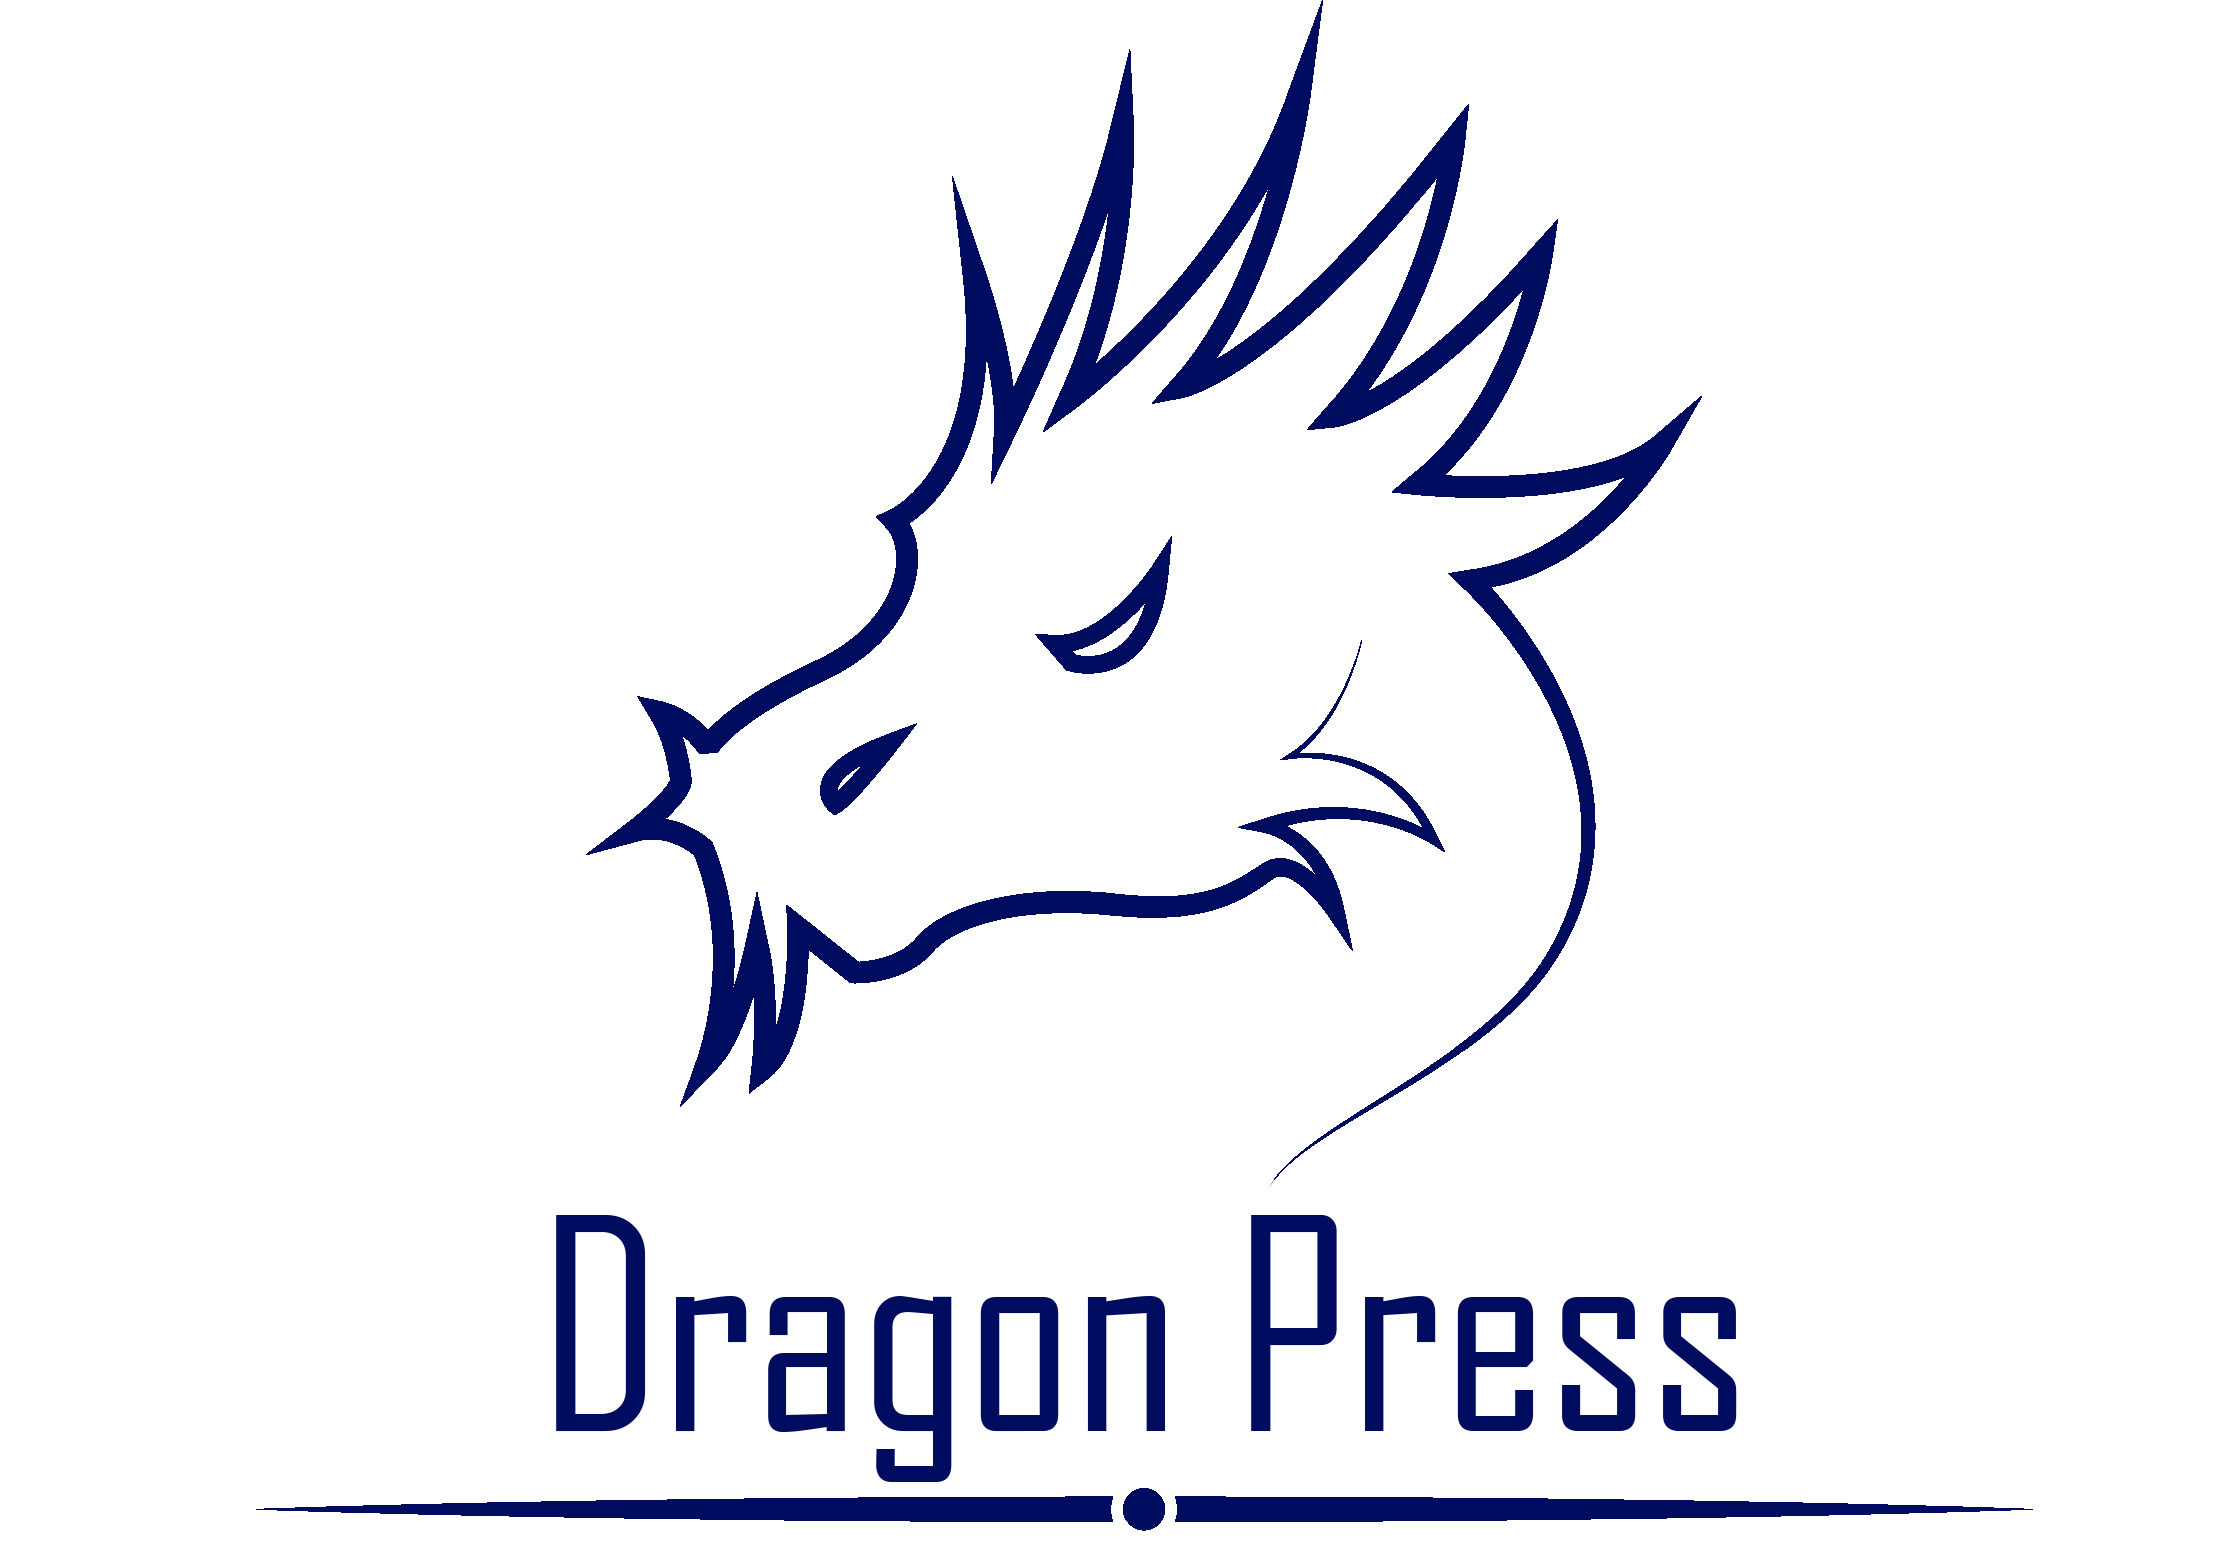 (c) Dragonpress.net